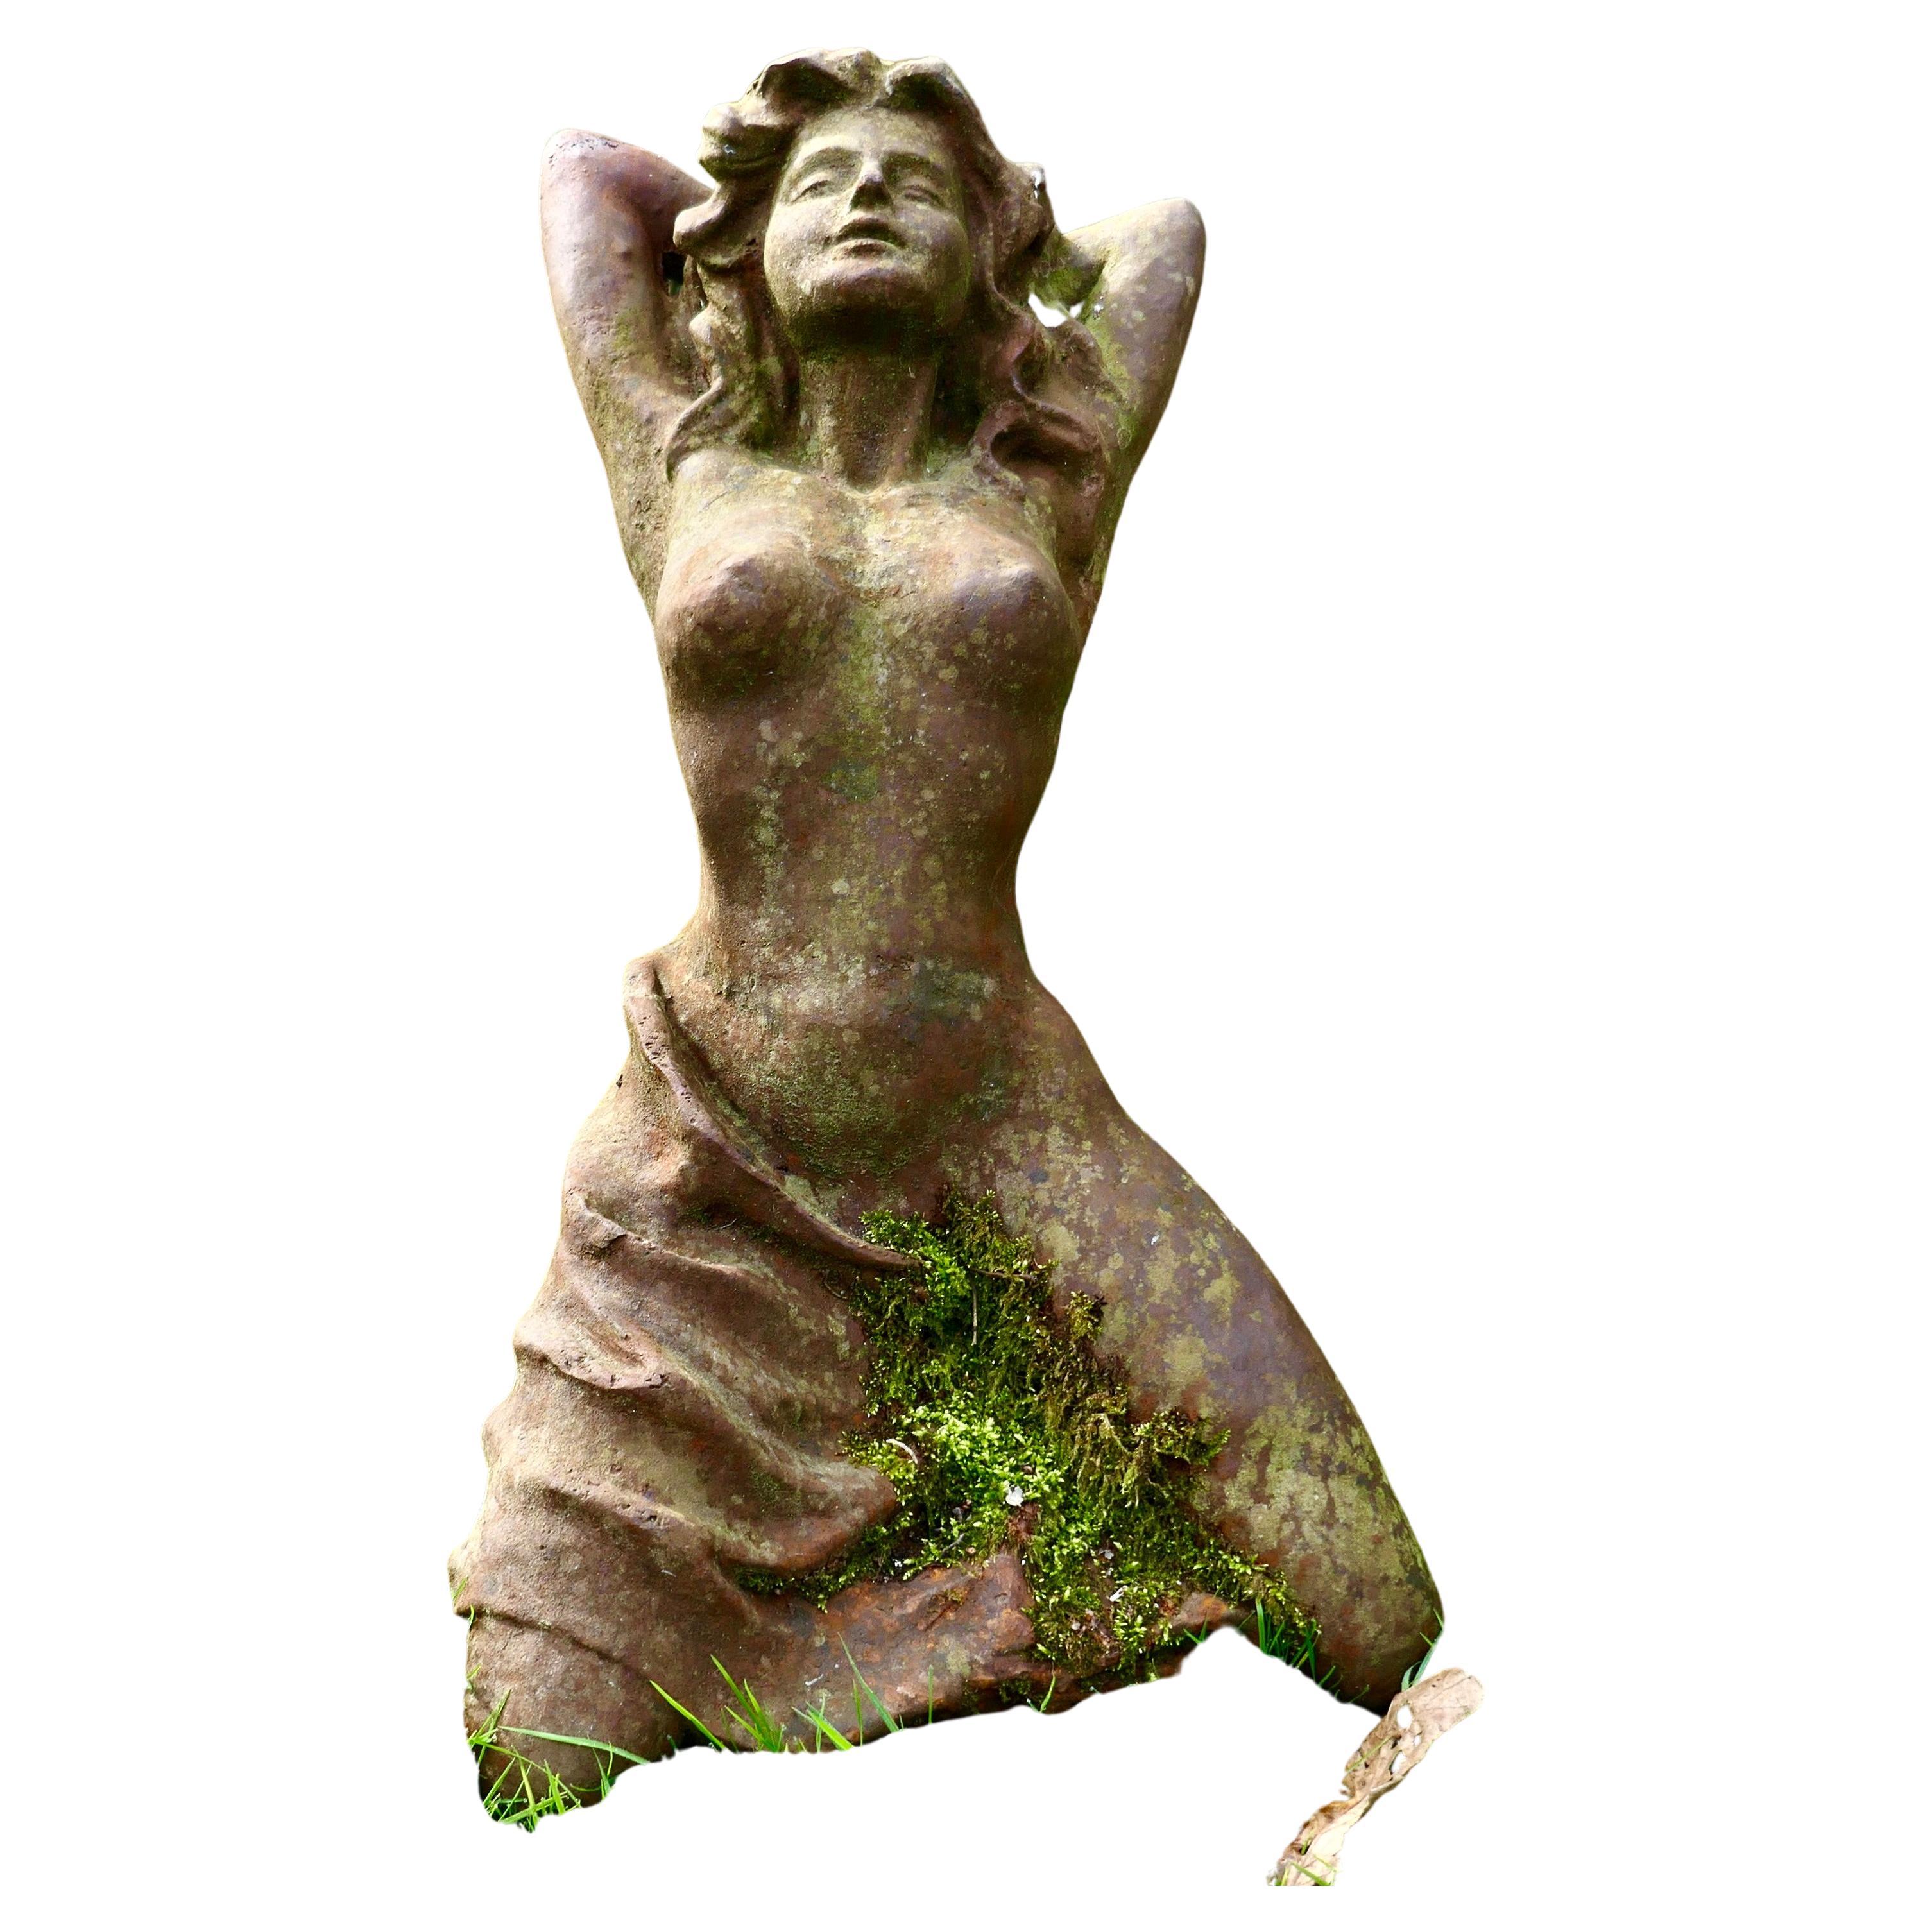 Weathered Female Statue of a Nude Figure “Shameless”